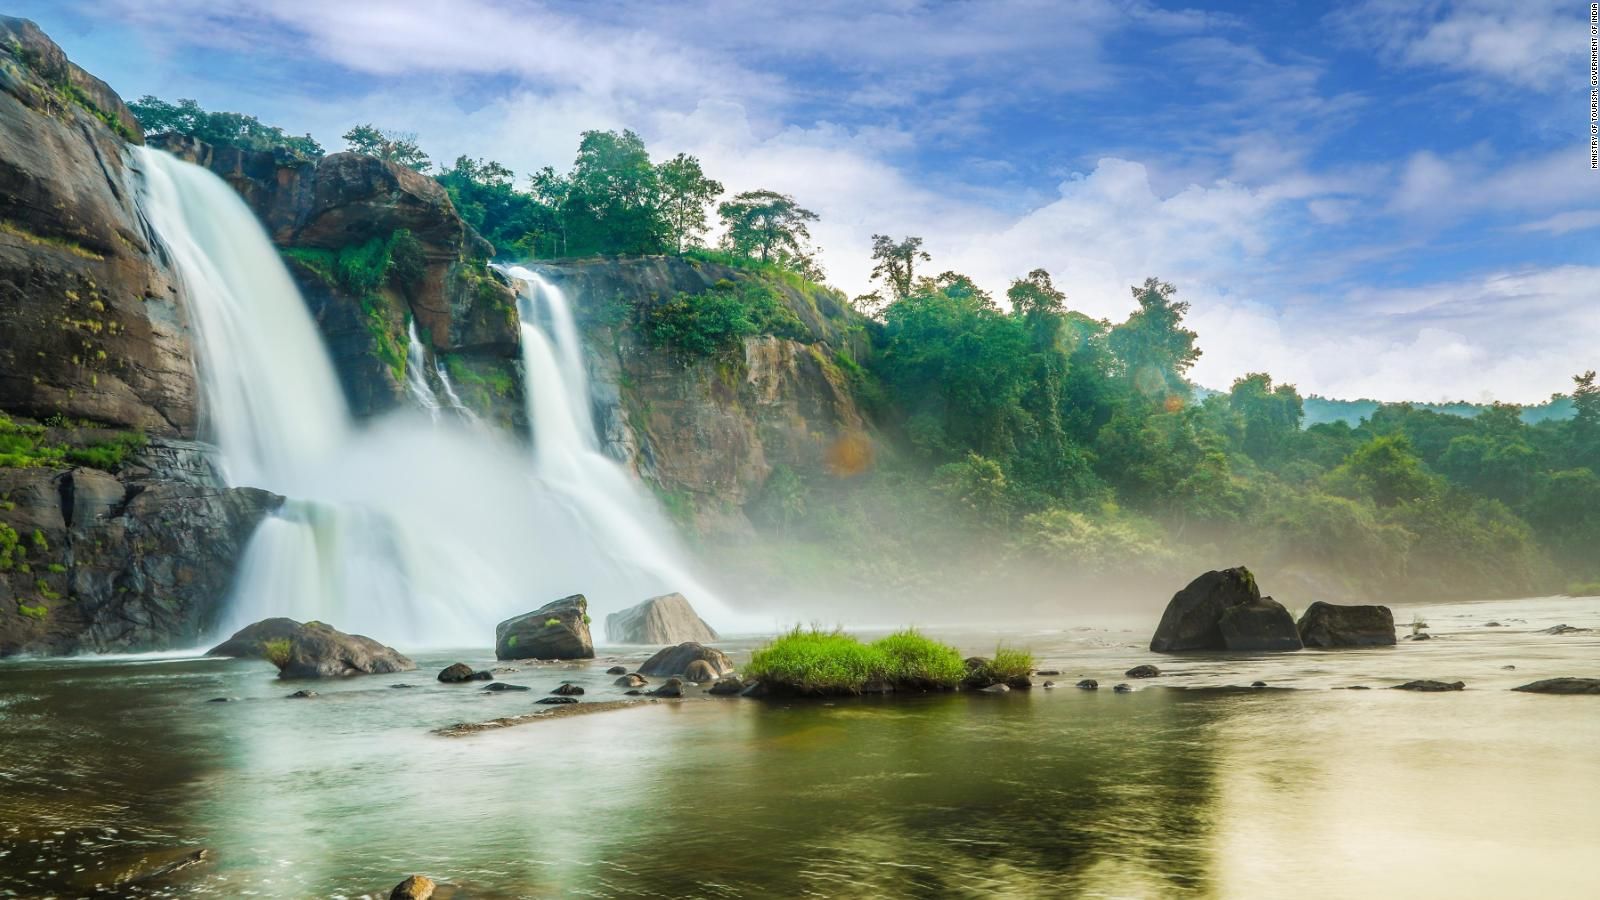 of India's most beautiful waterfalls